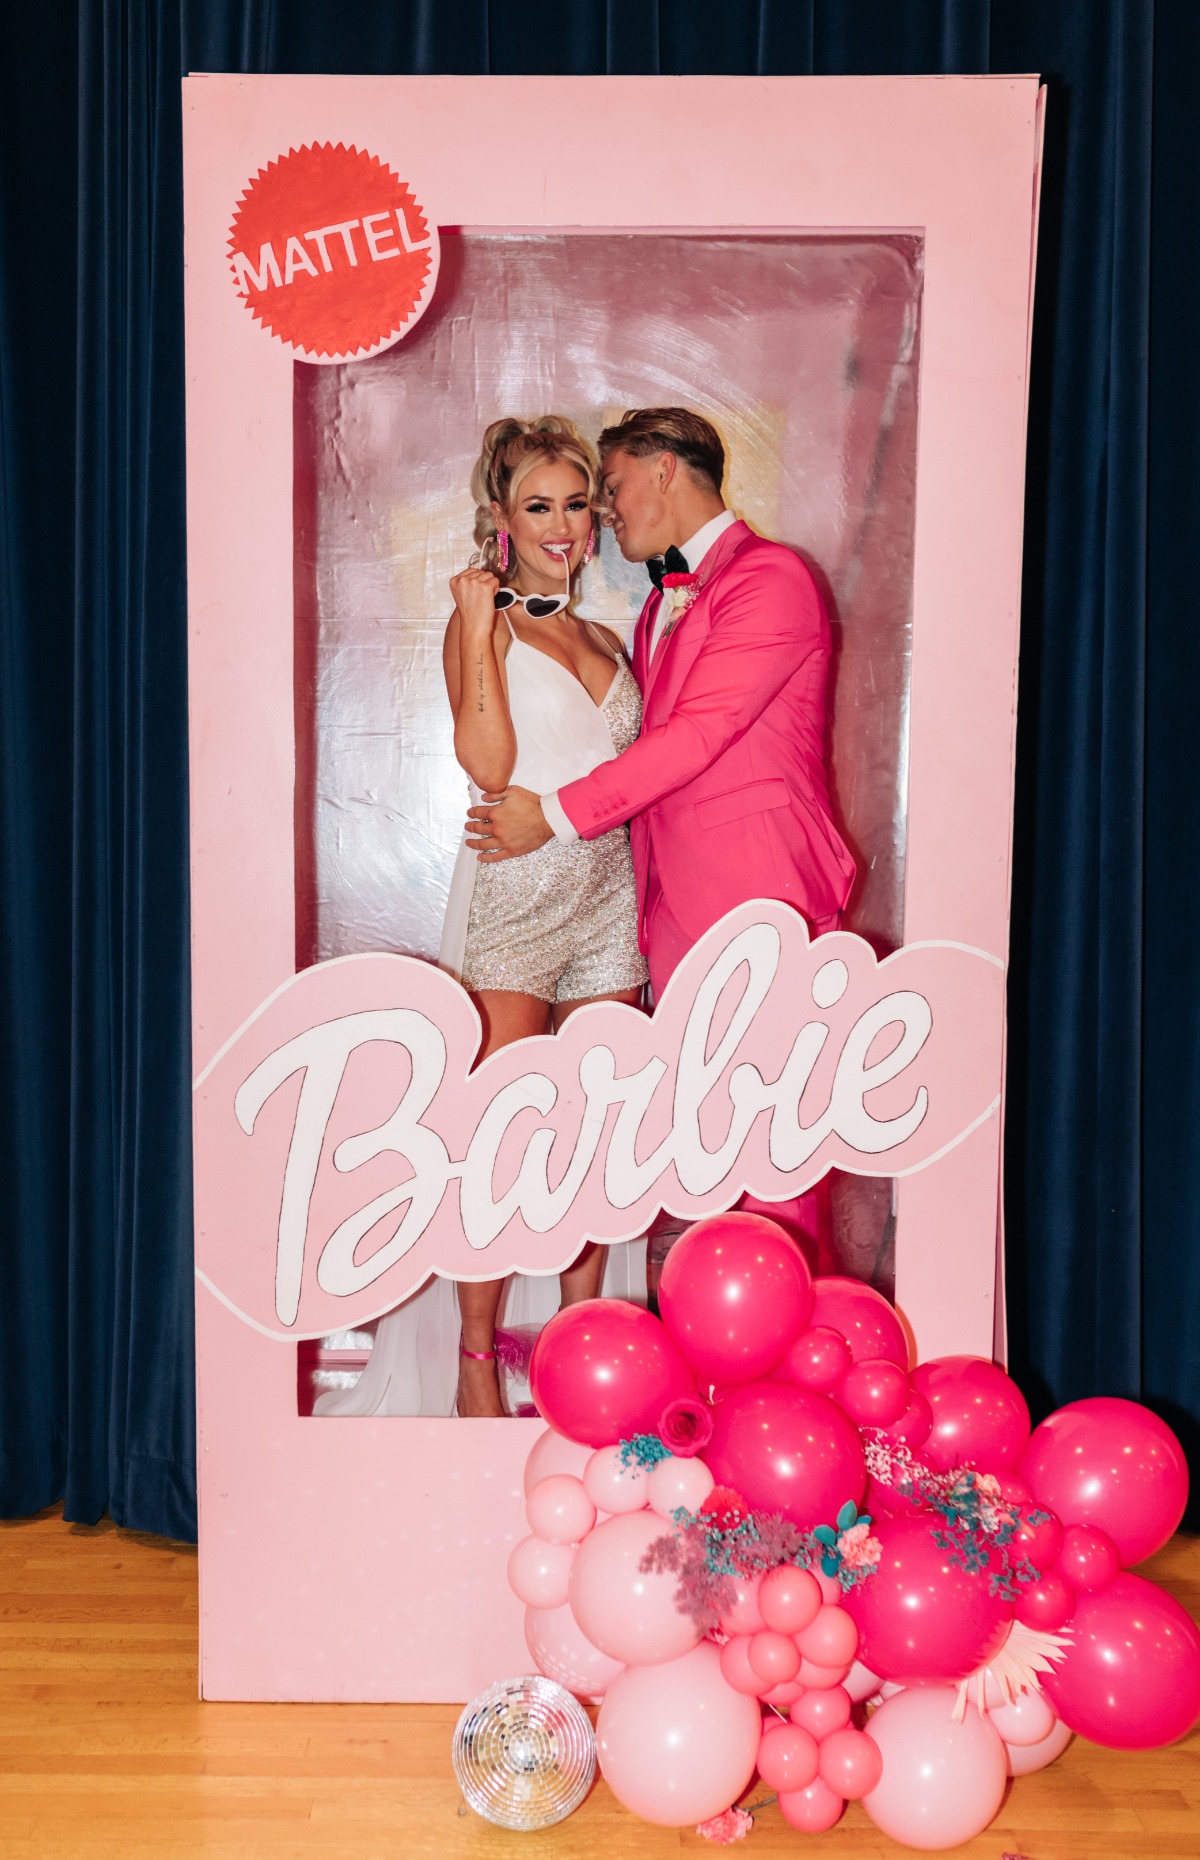 Barbie-inspired wedding